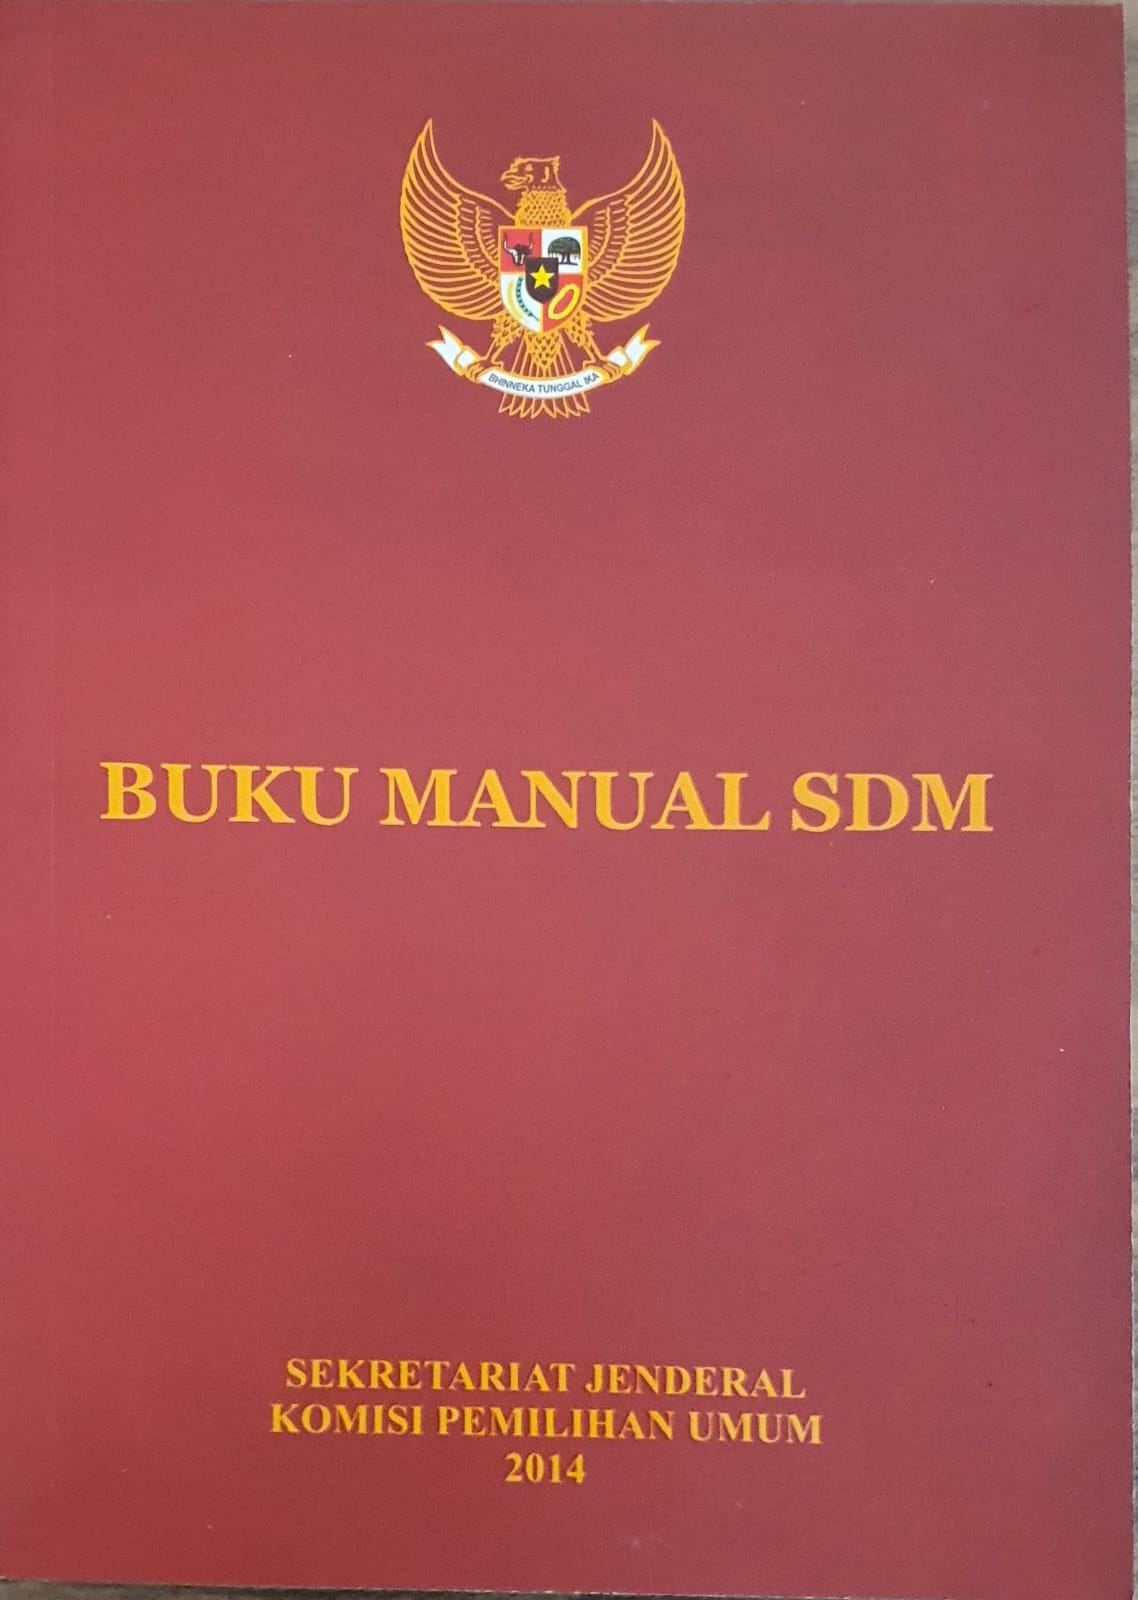 Buku Manual SDM 